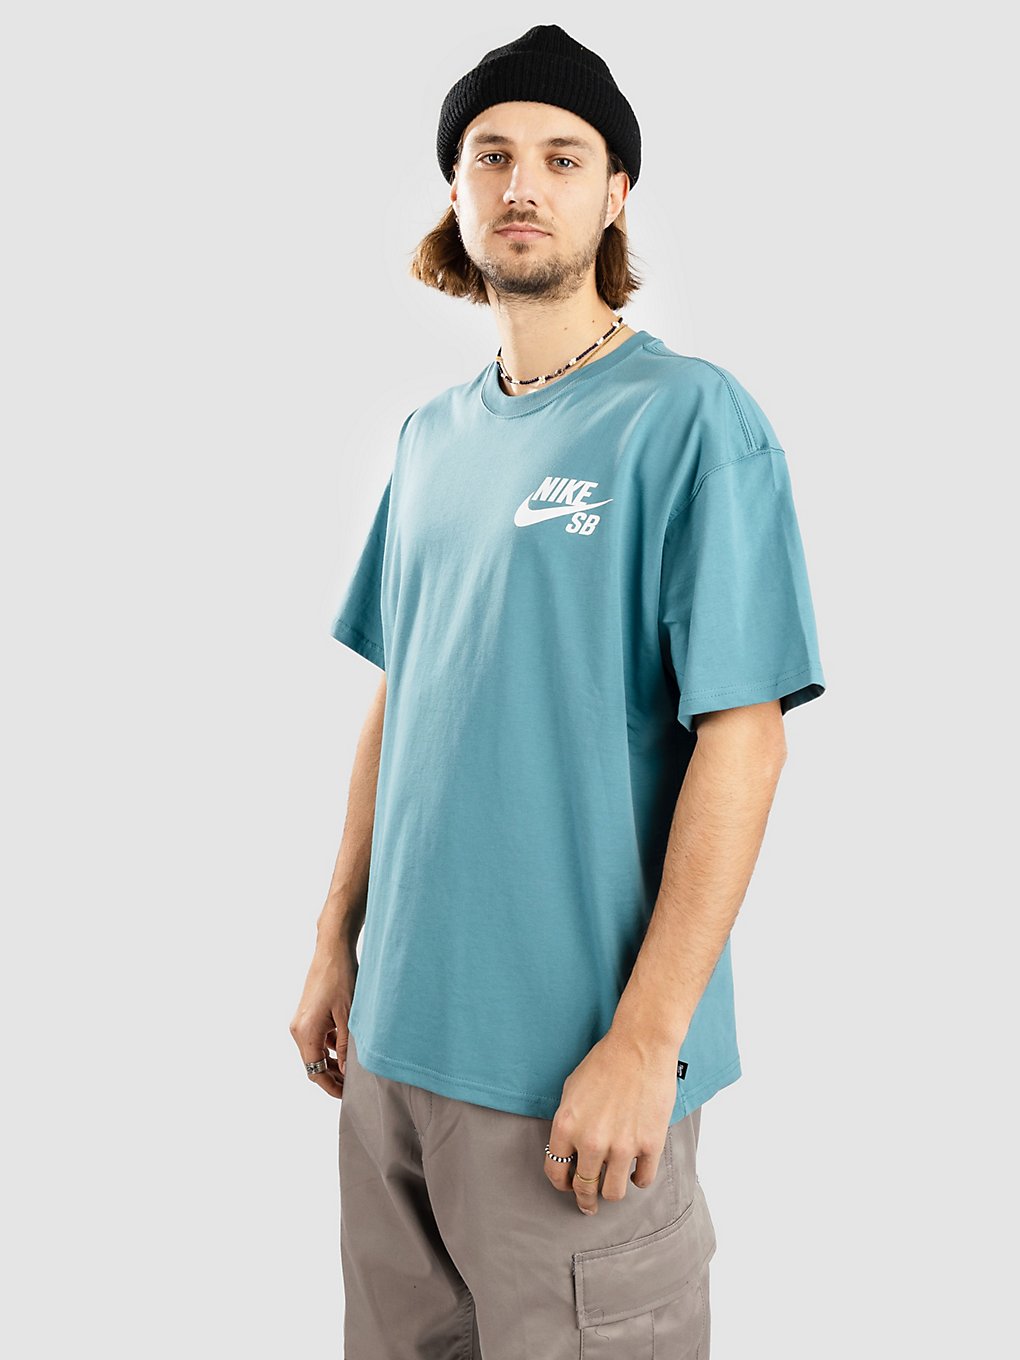 Nike Sb Logo T-Shirt mineral teal kaufen